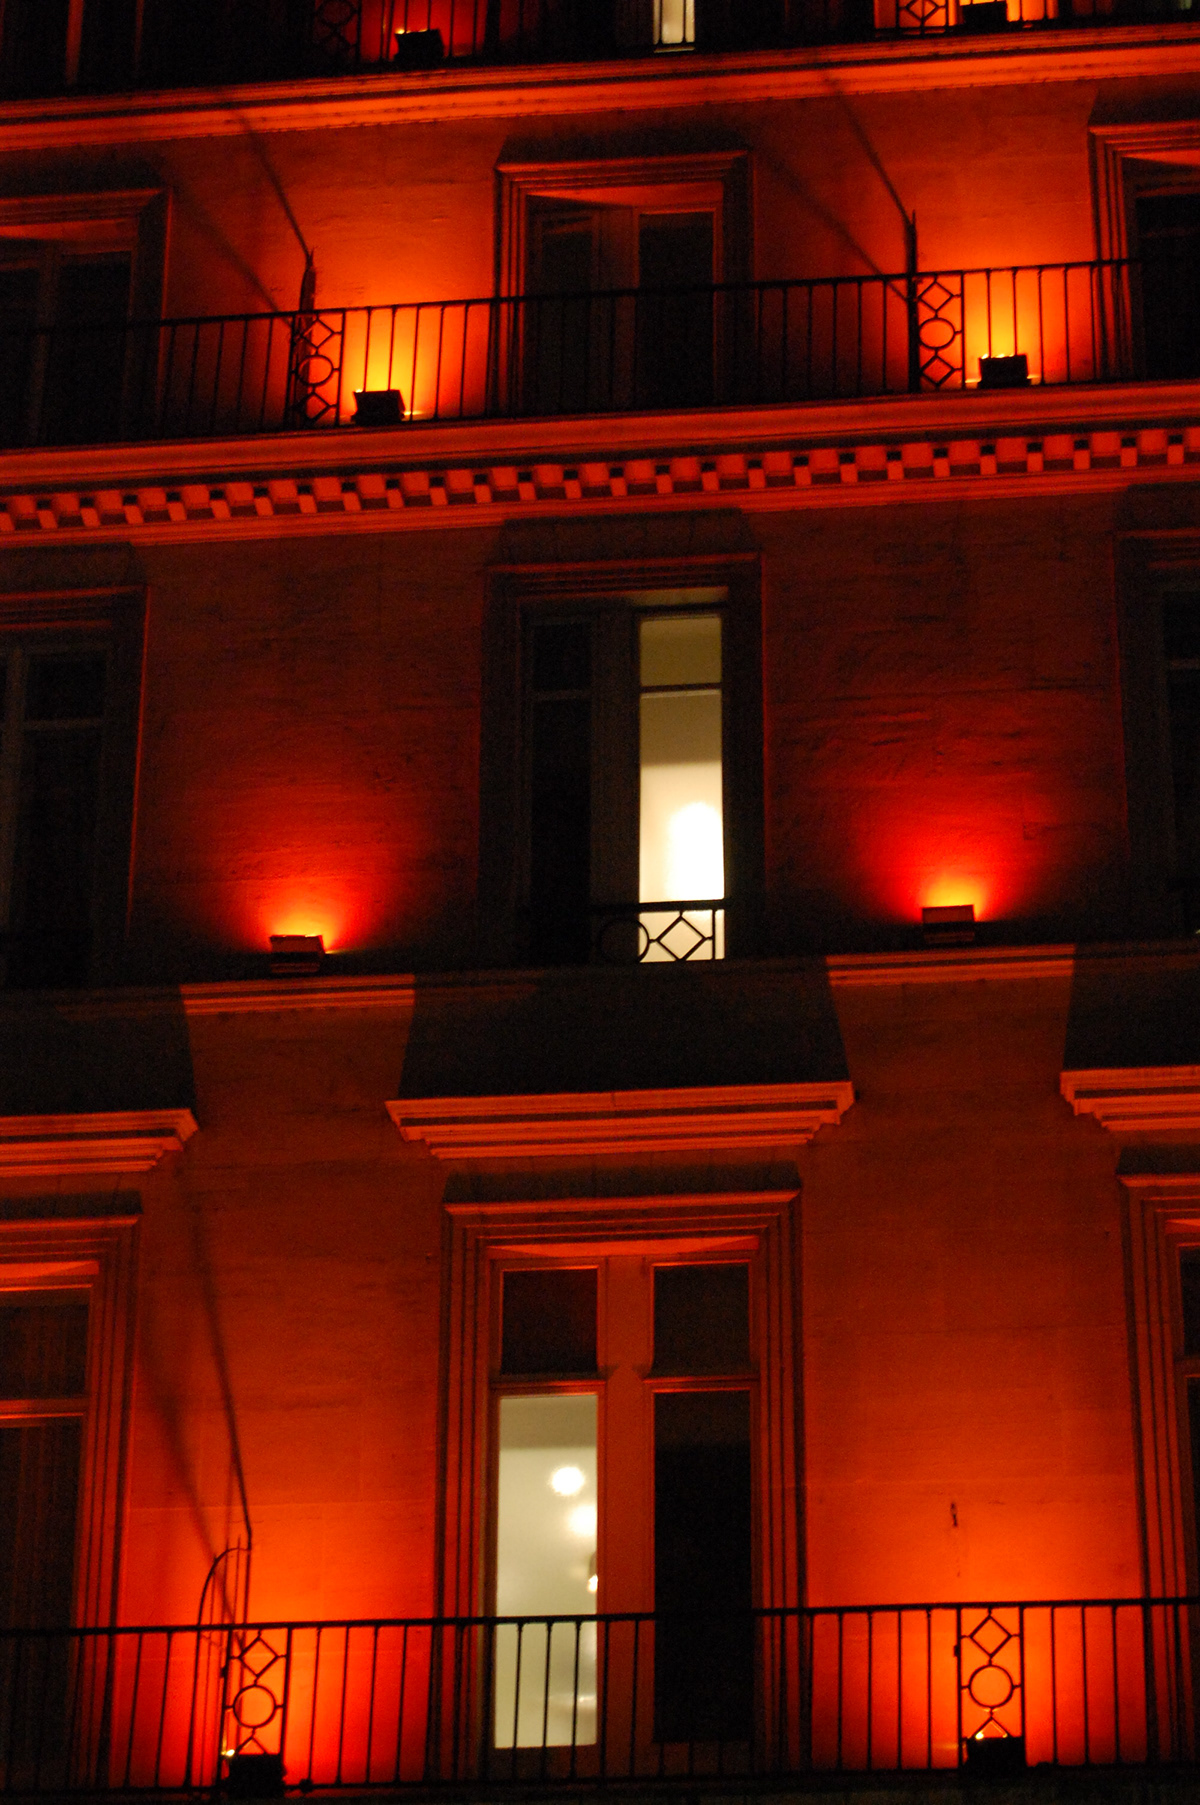 Paris eifel tower lights